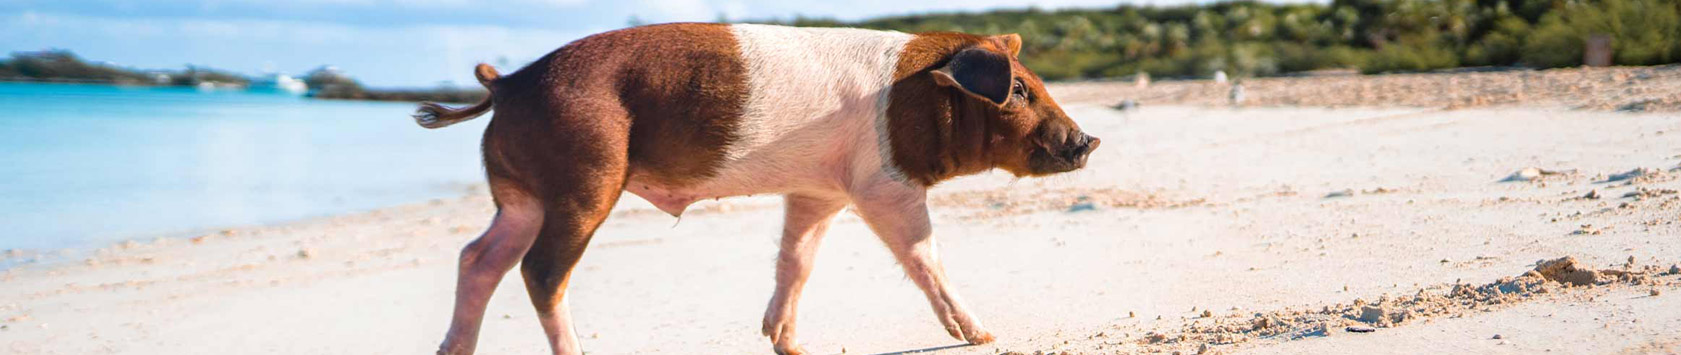 varkens-strand-curaçao-vakantie